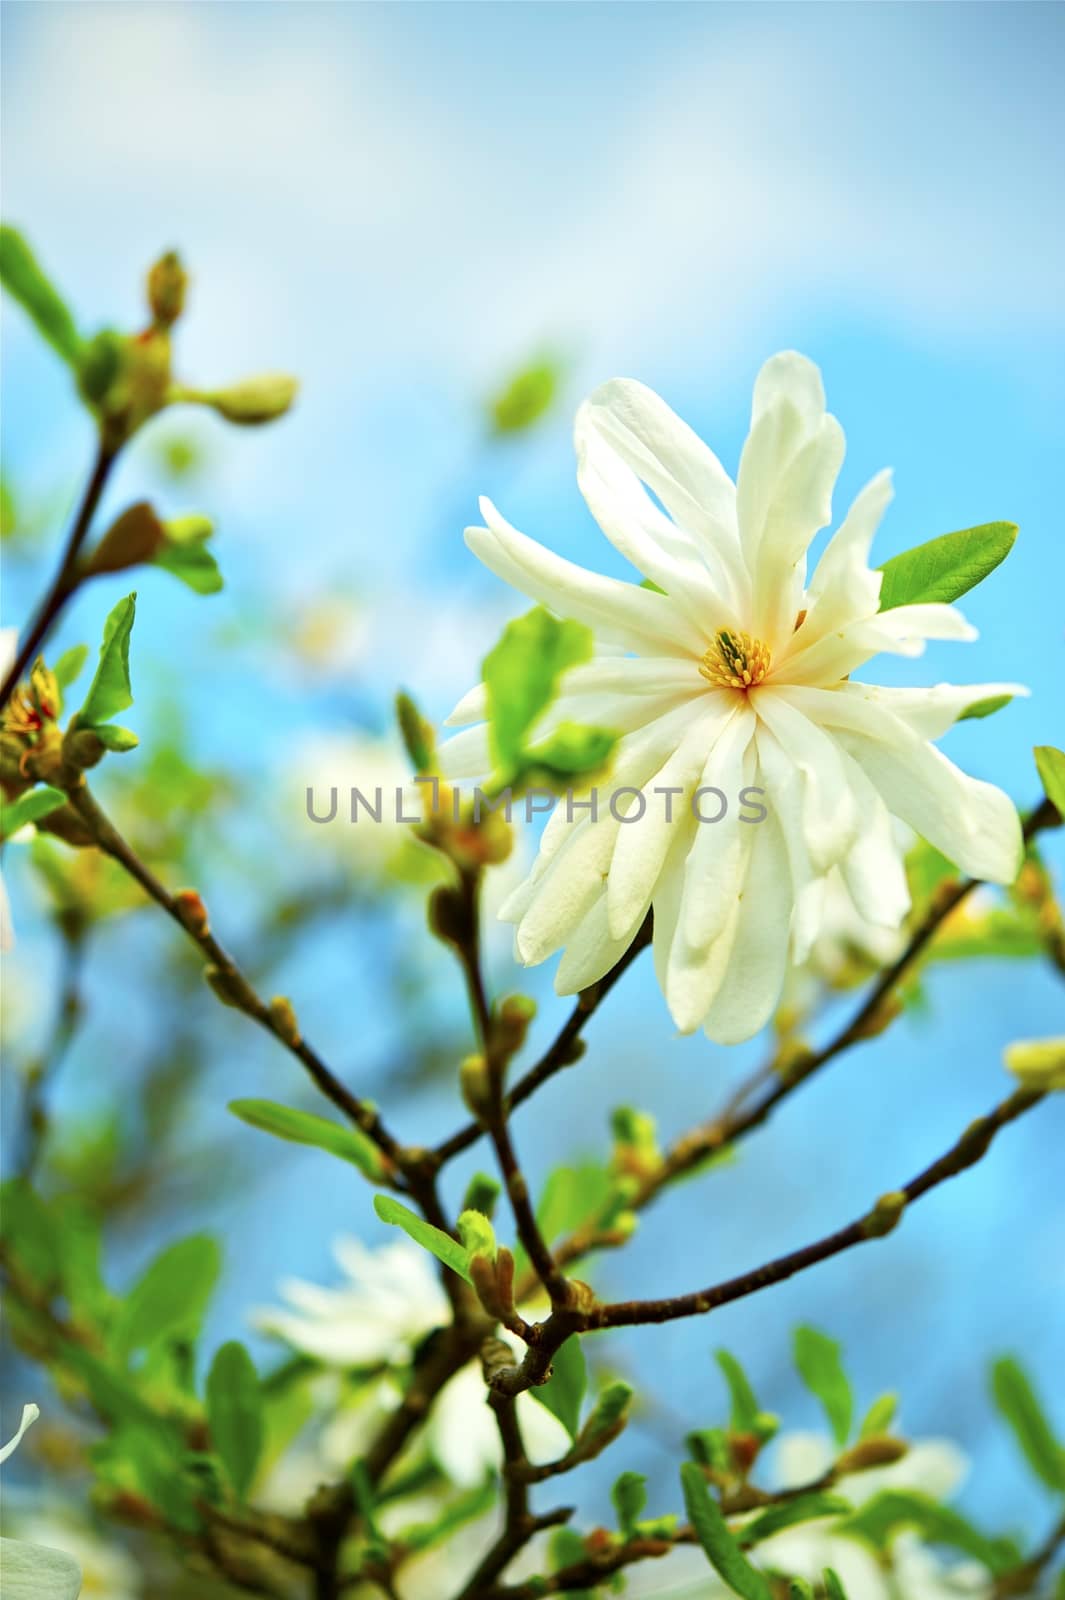 Star Magnolias - Stellata. Flowering Magnolia Tree Vertical Closeup Photo.